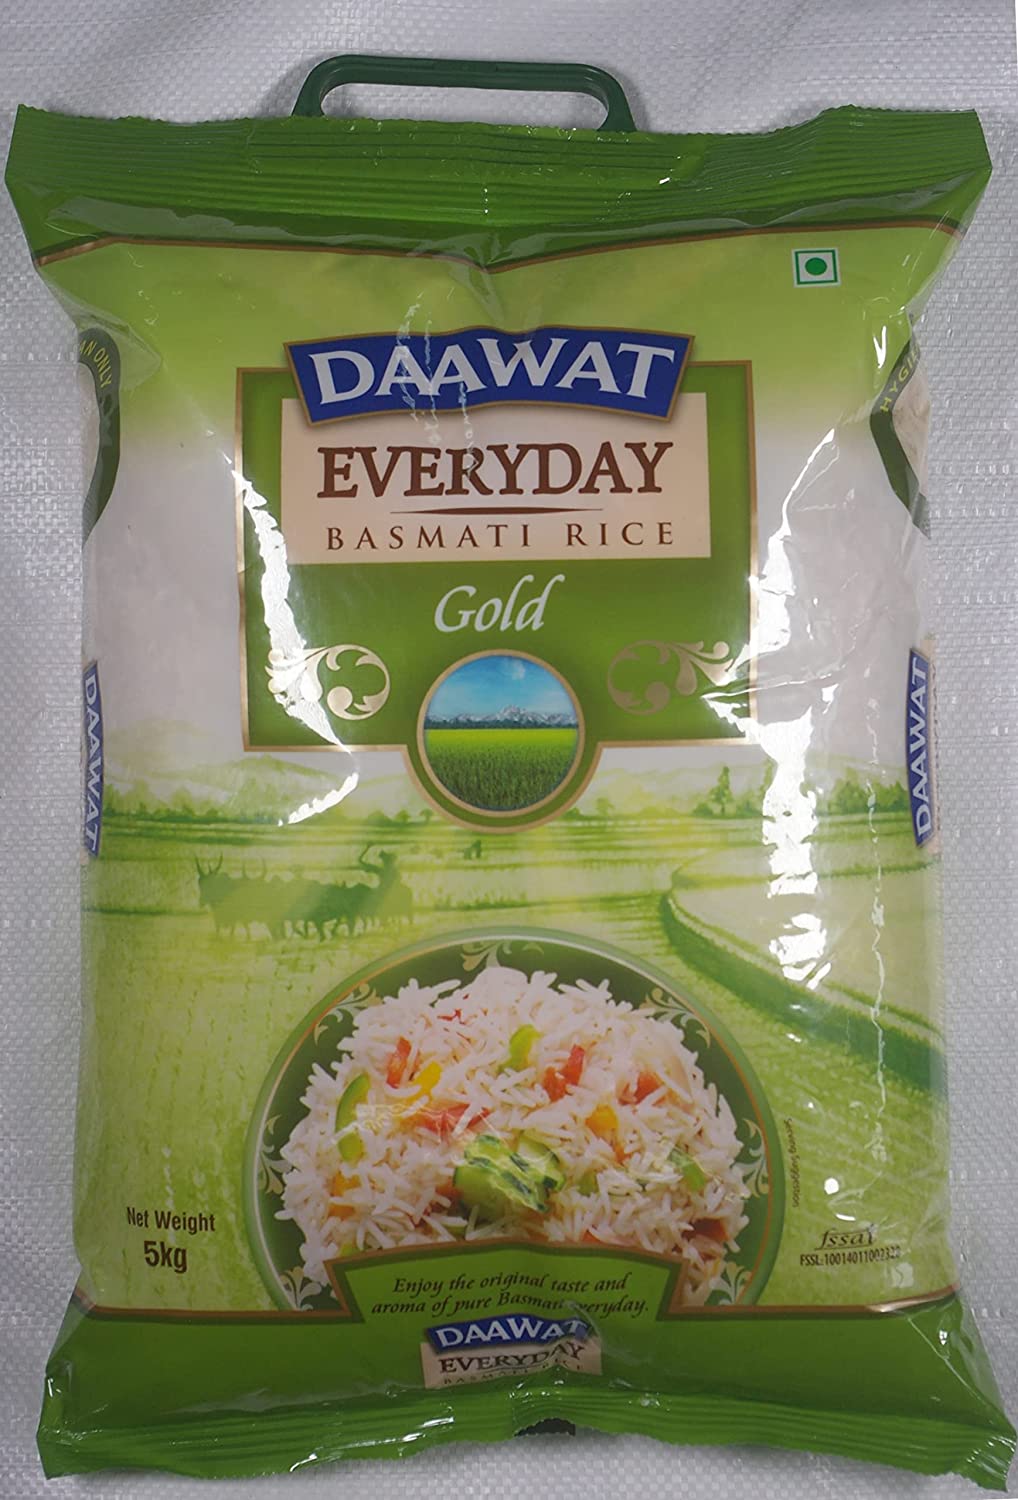 Daawat Everyday Gold Basmati Rice 5 kg